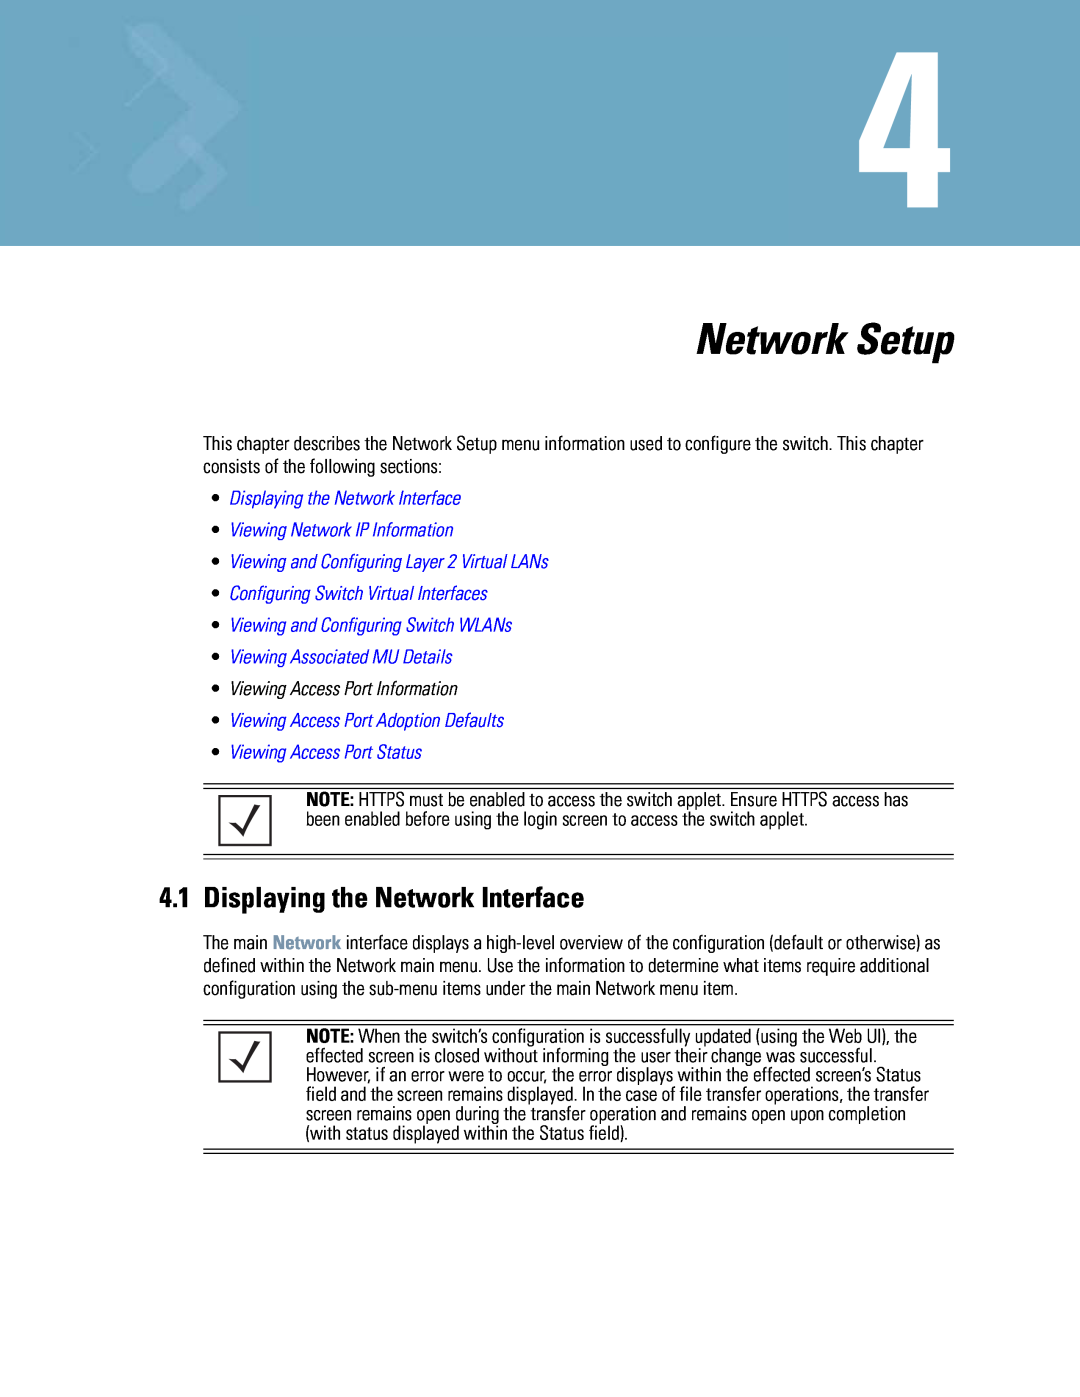 Motorola WS5100 manual Network Setup, •Displaying the Network Interface, •Viewing Network IP Information 